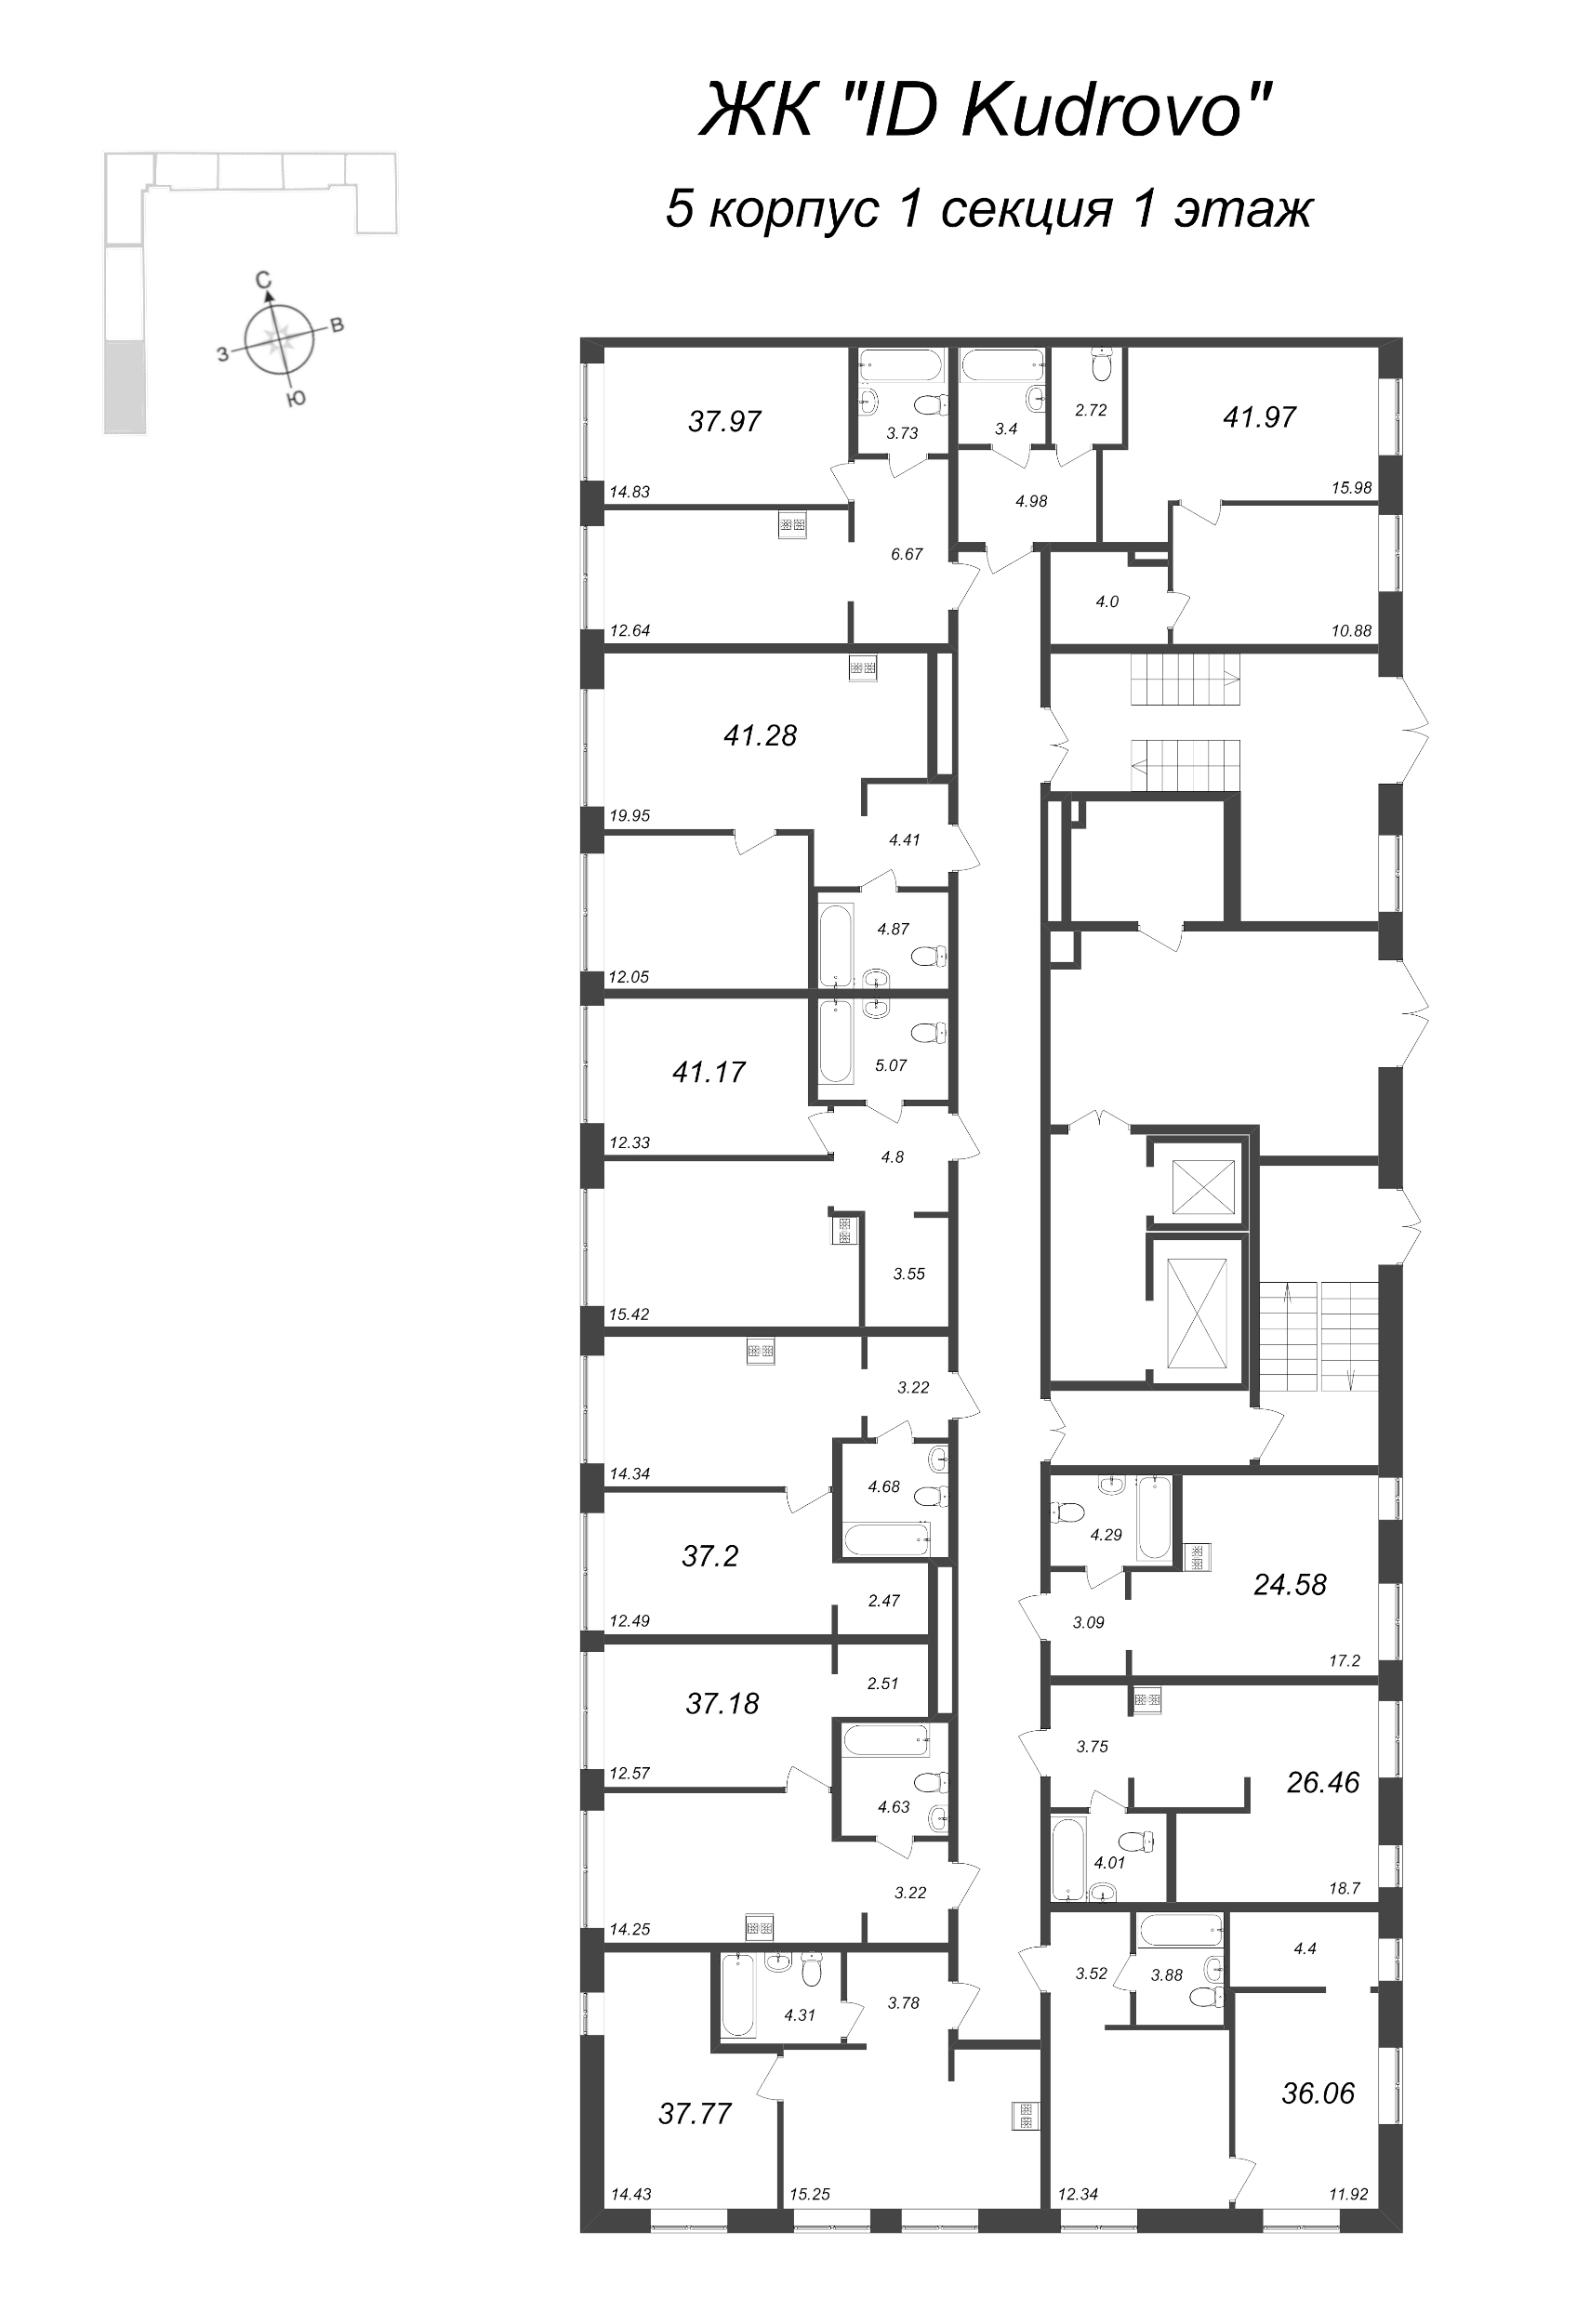 2-комнатная (Евро) квартира, 37.2 м² - планировка этажа